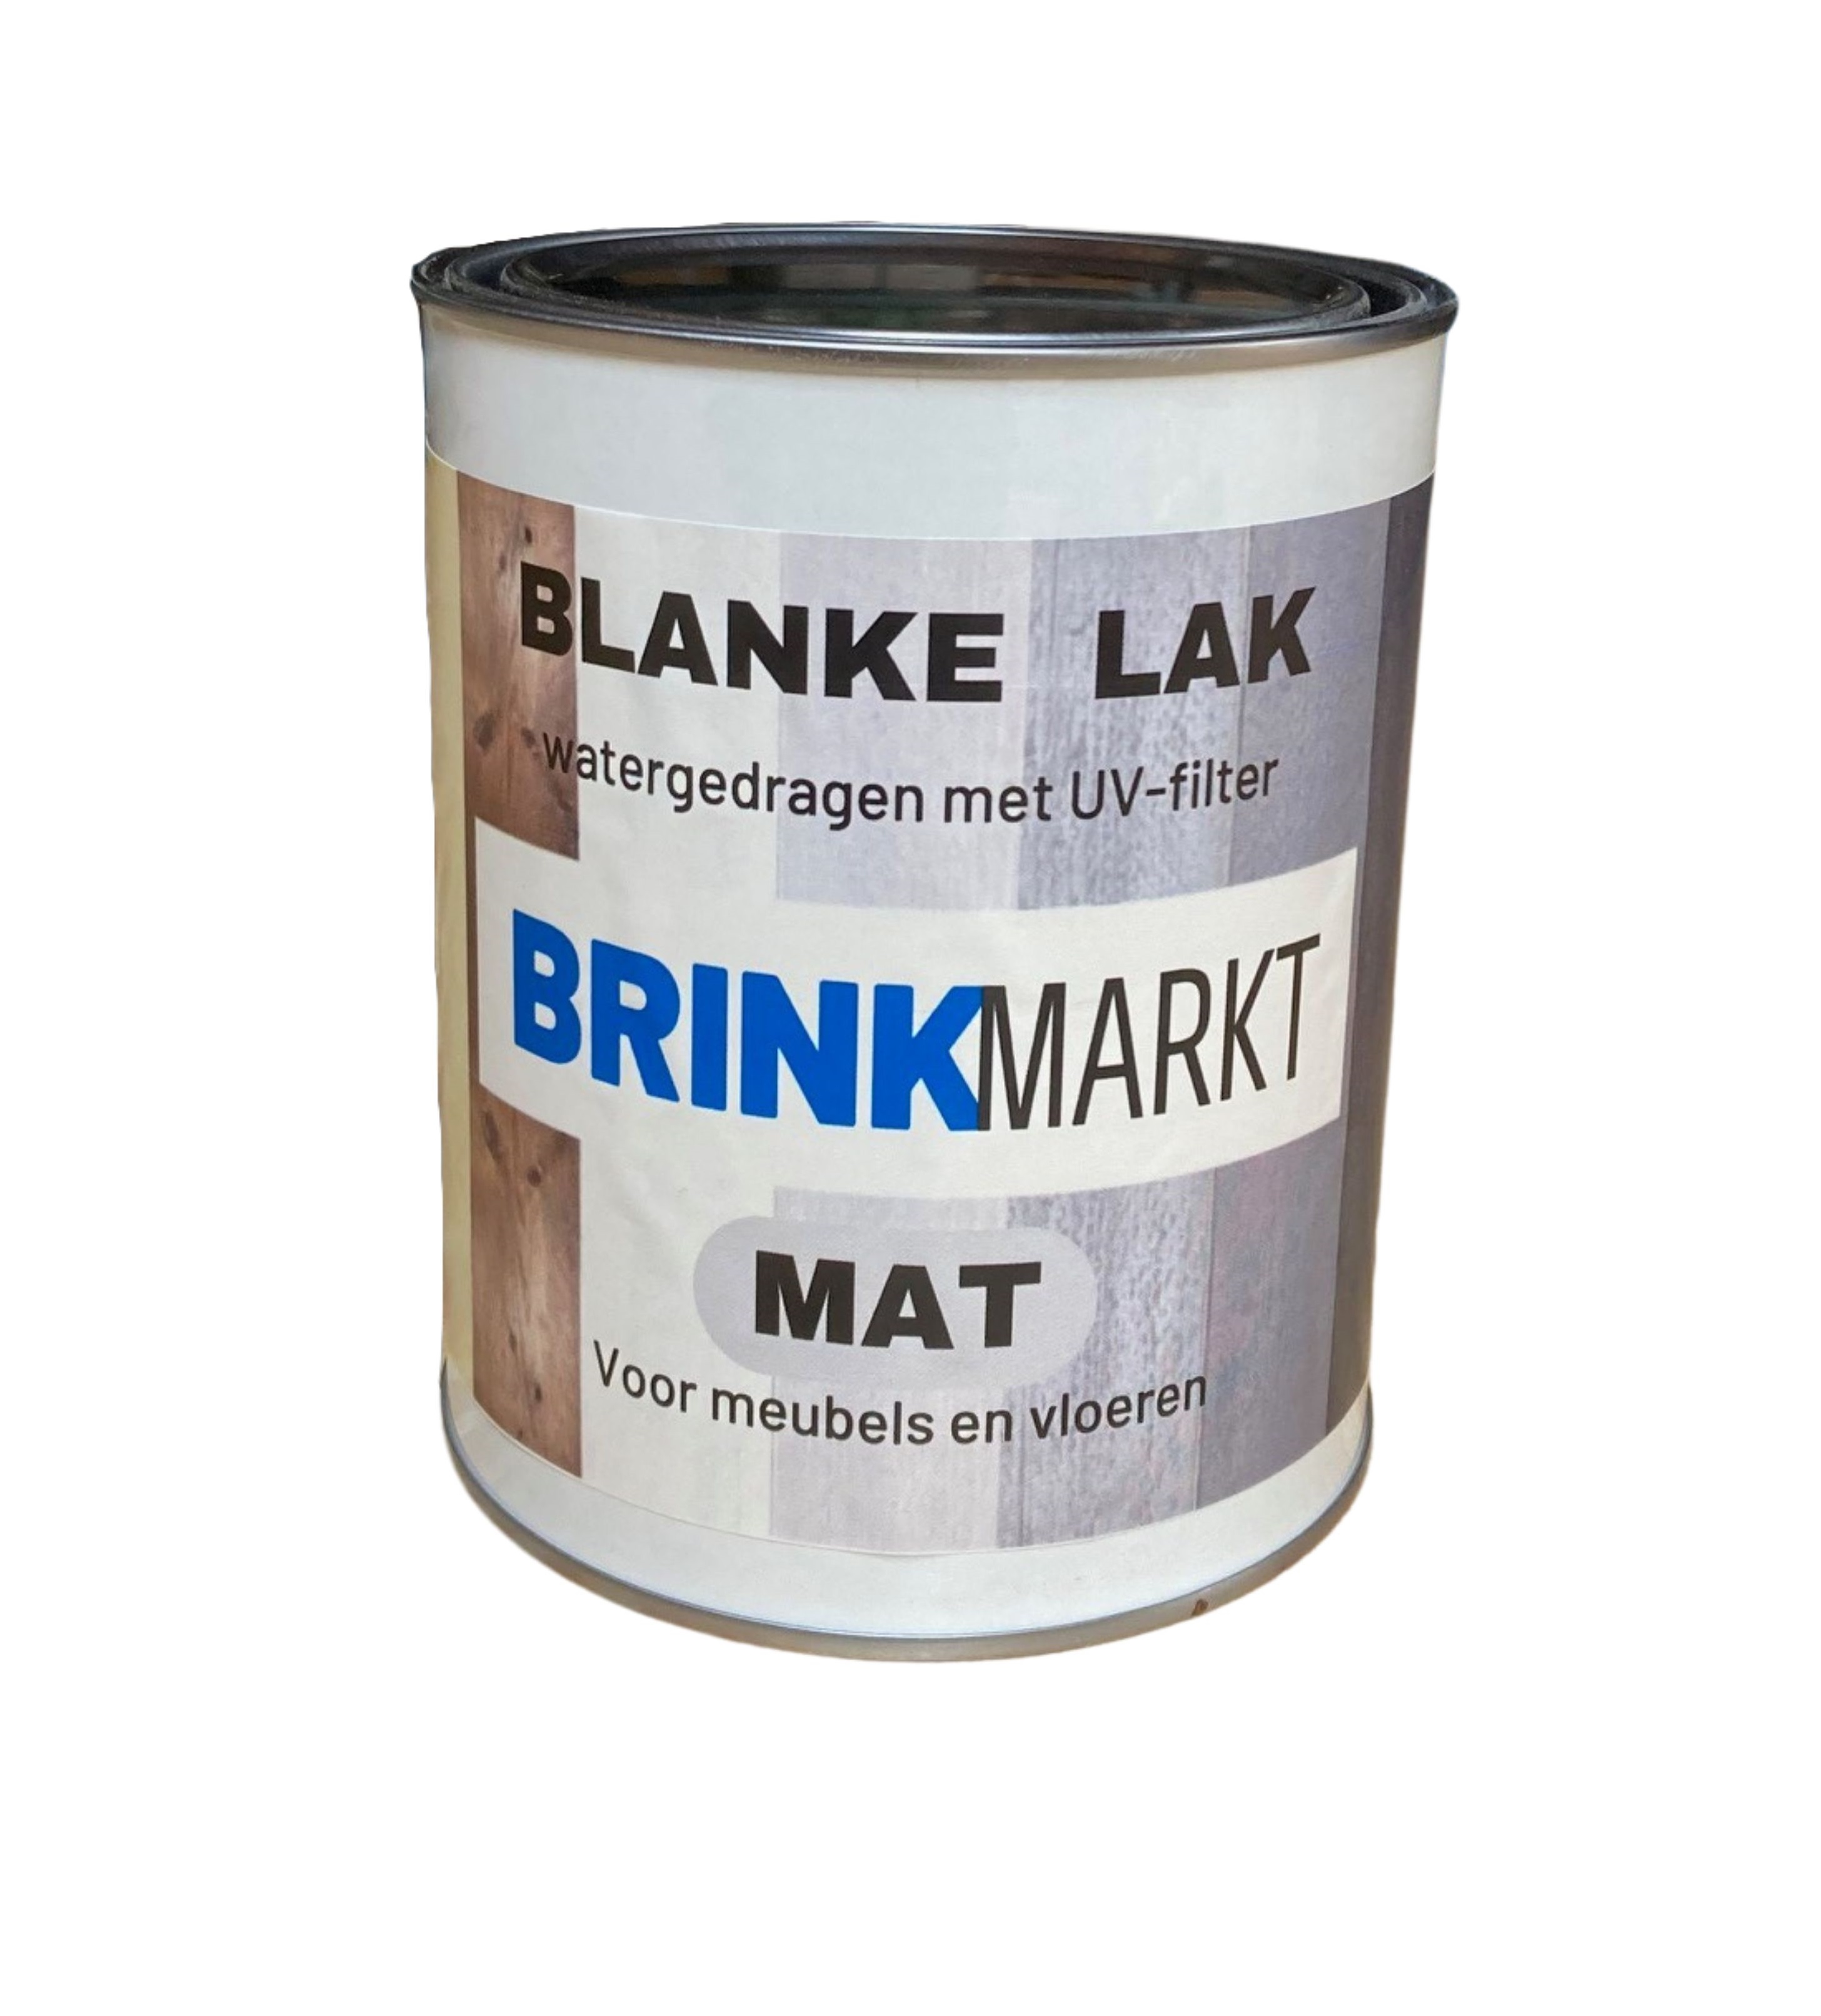 BM Blanke lak MAT water gedragen 1 Liter met UV-filter-9509671415928